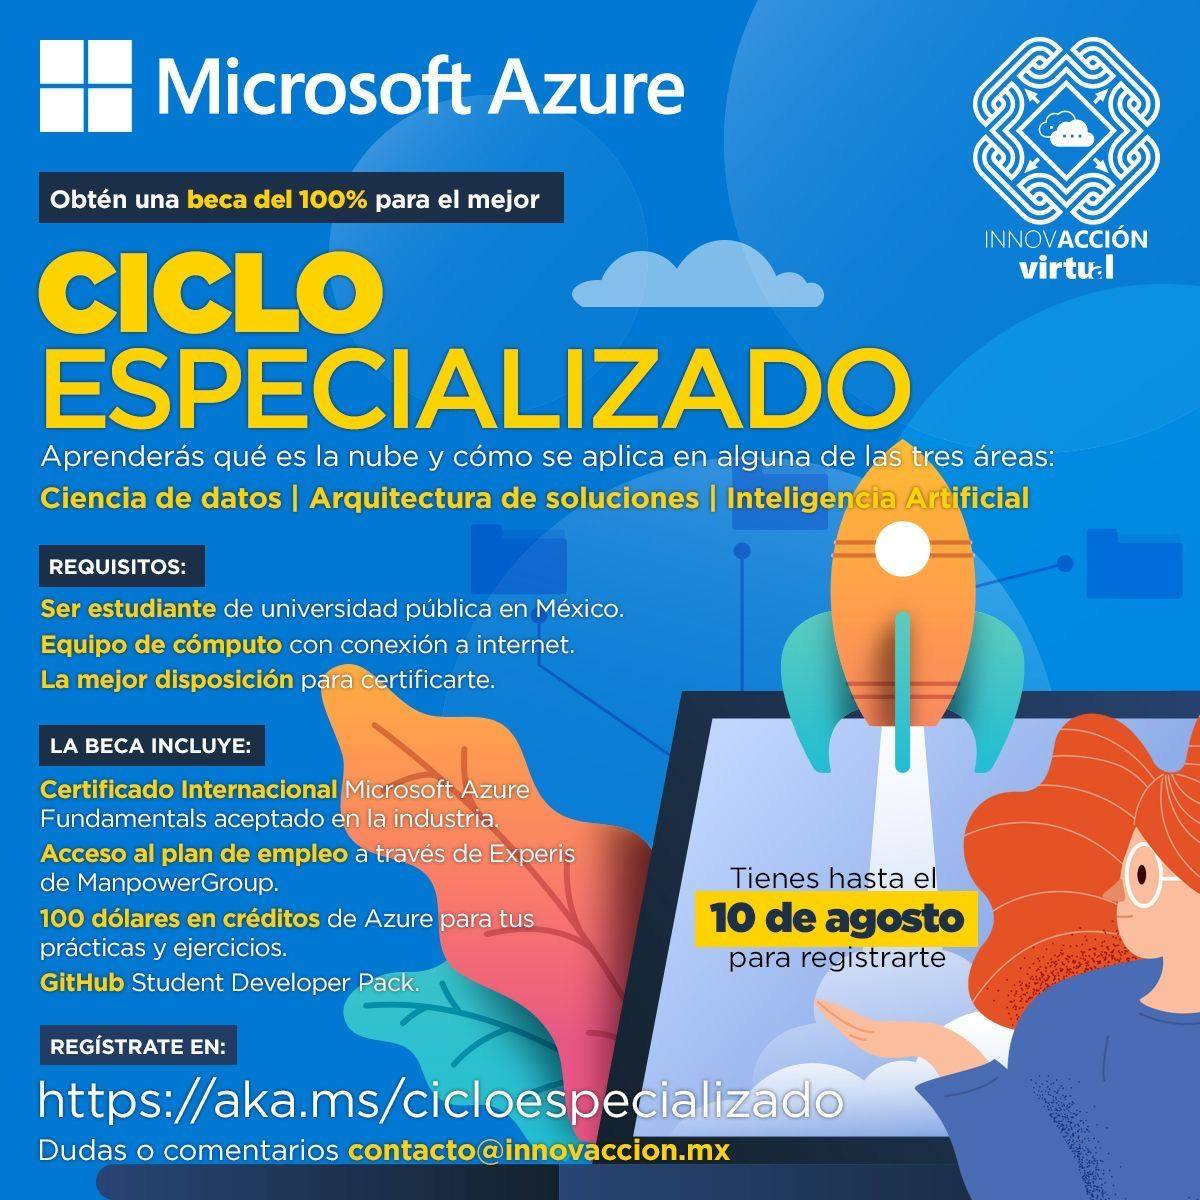 Microsoft Azure: Ciclo especializado (Exclusivo Estudiantes UAS)